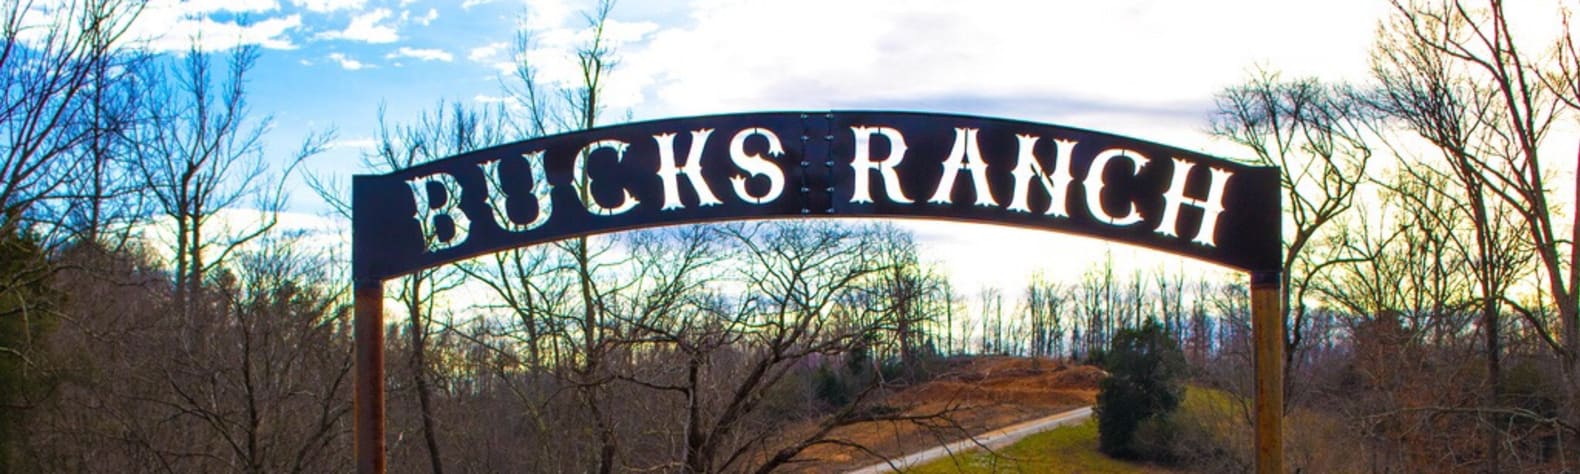 Bucks Ranch Retreat